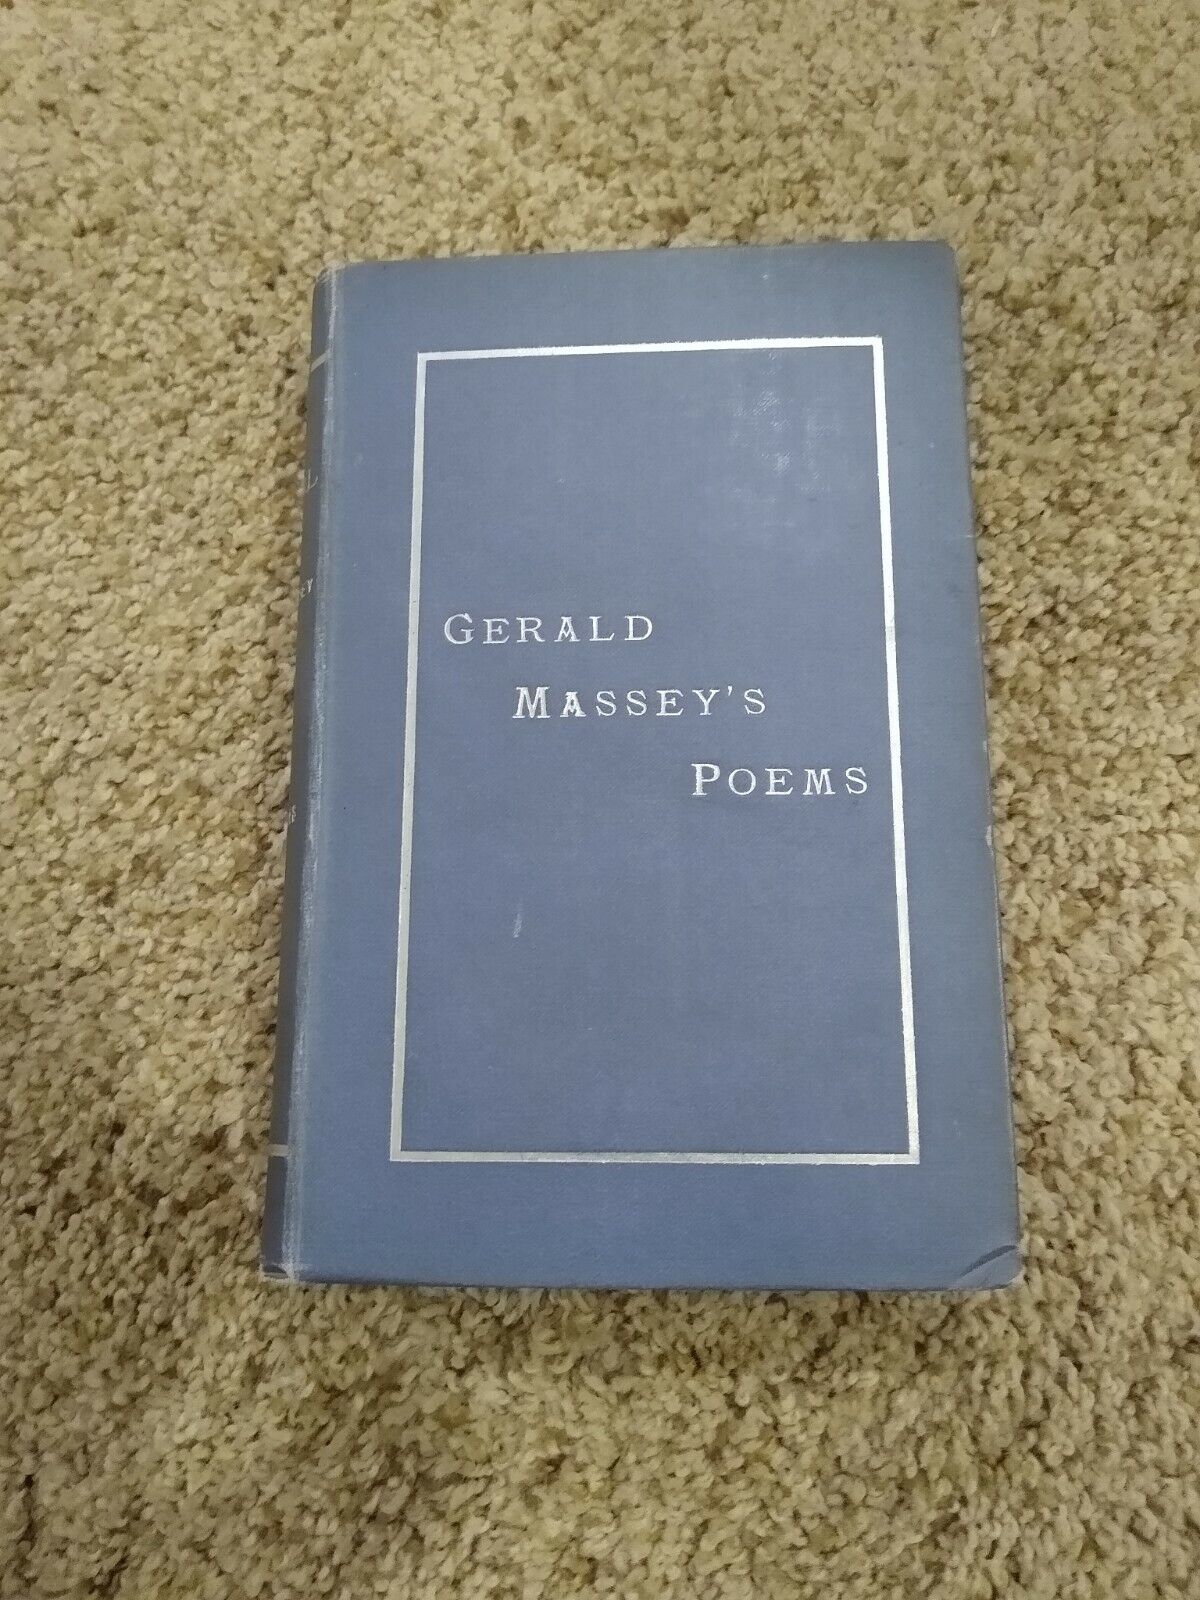 My Lyrical Life - Gerald Massey - 1889 - First Edition